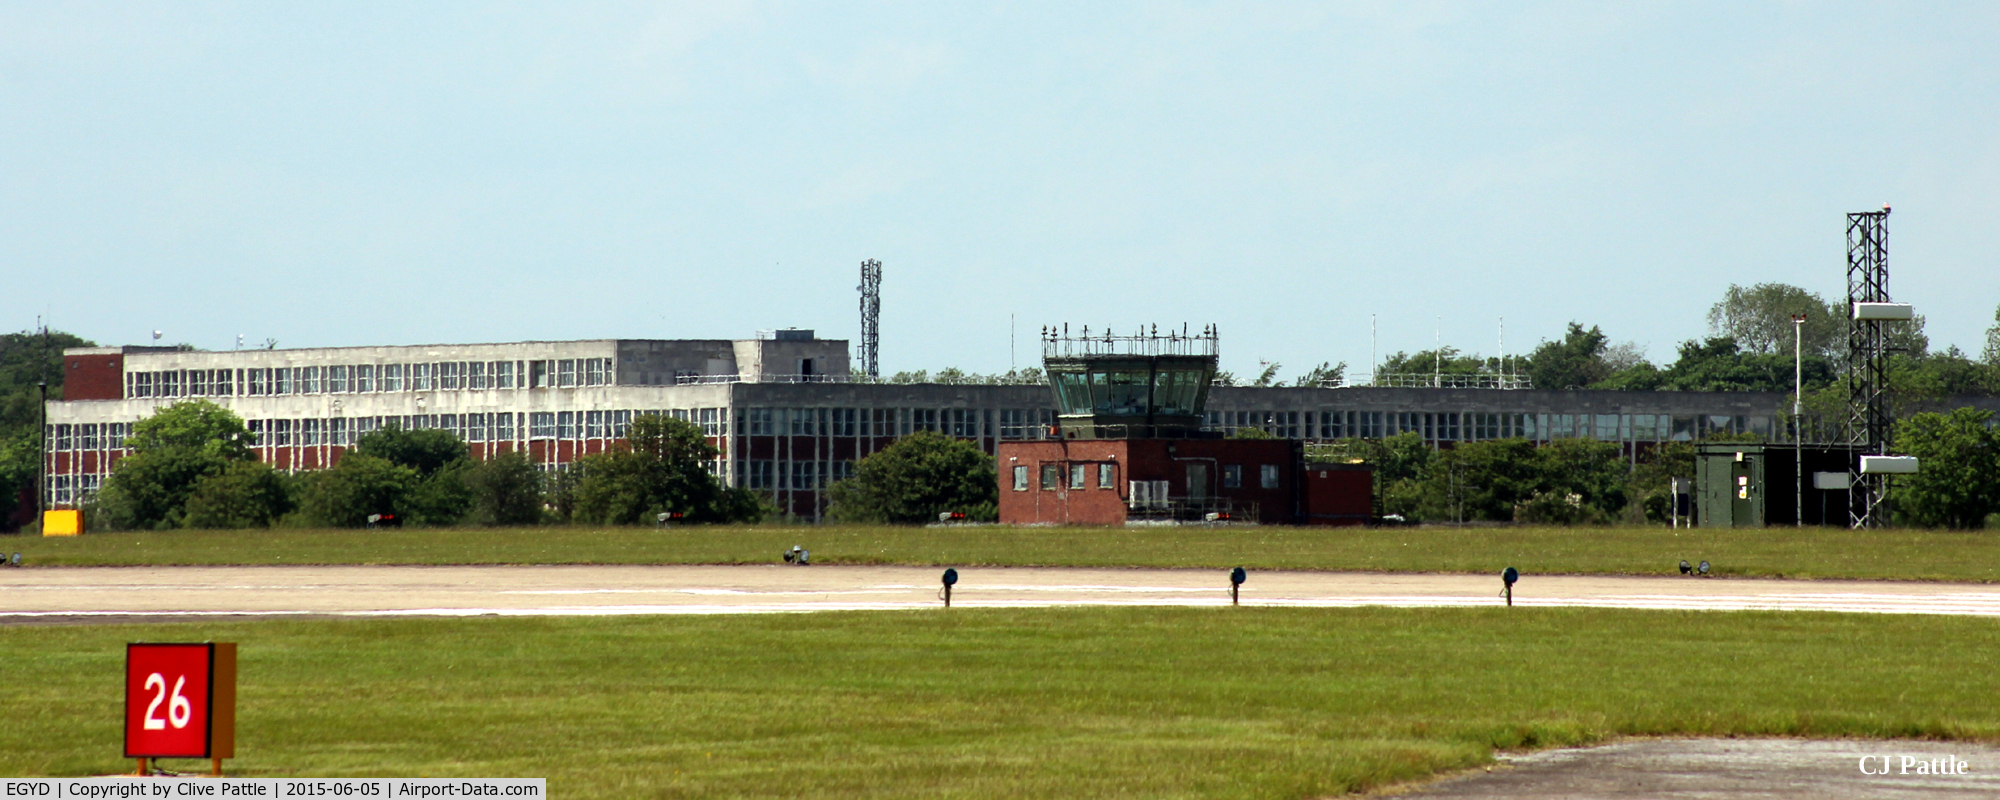 RAF Cranwell Airport, Cranwell, England United Kingdom (EGYD) - The HQ buildings and Control Tower at Cranwell EGYD